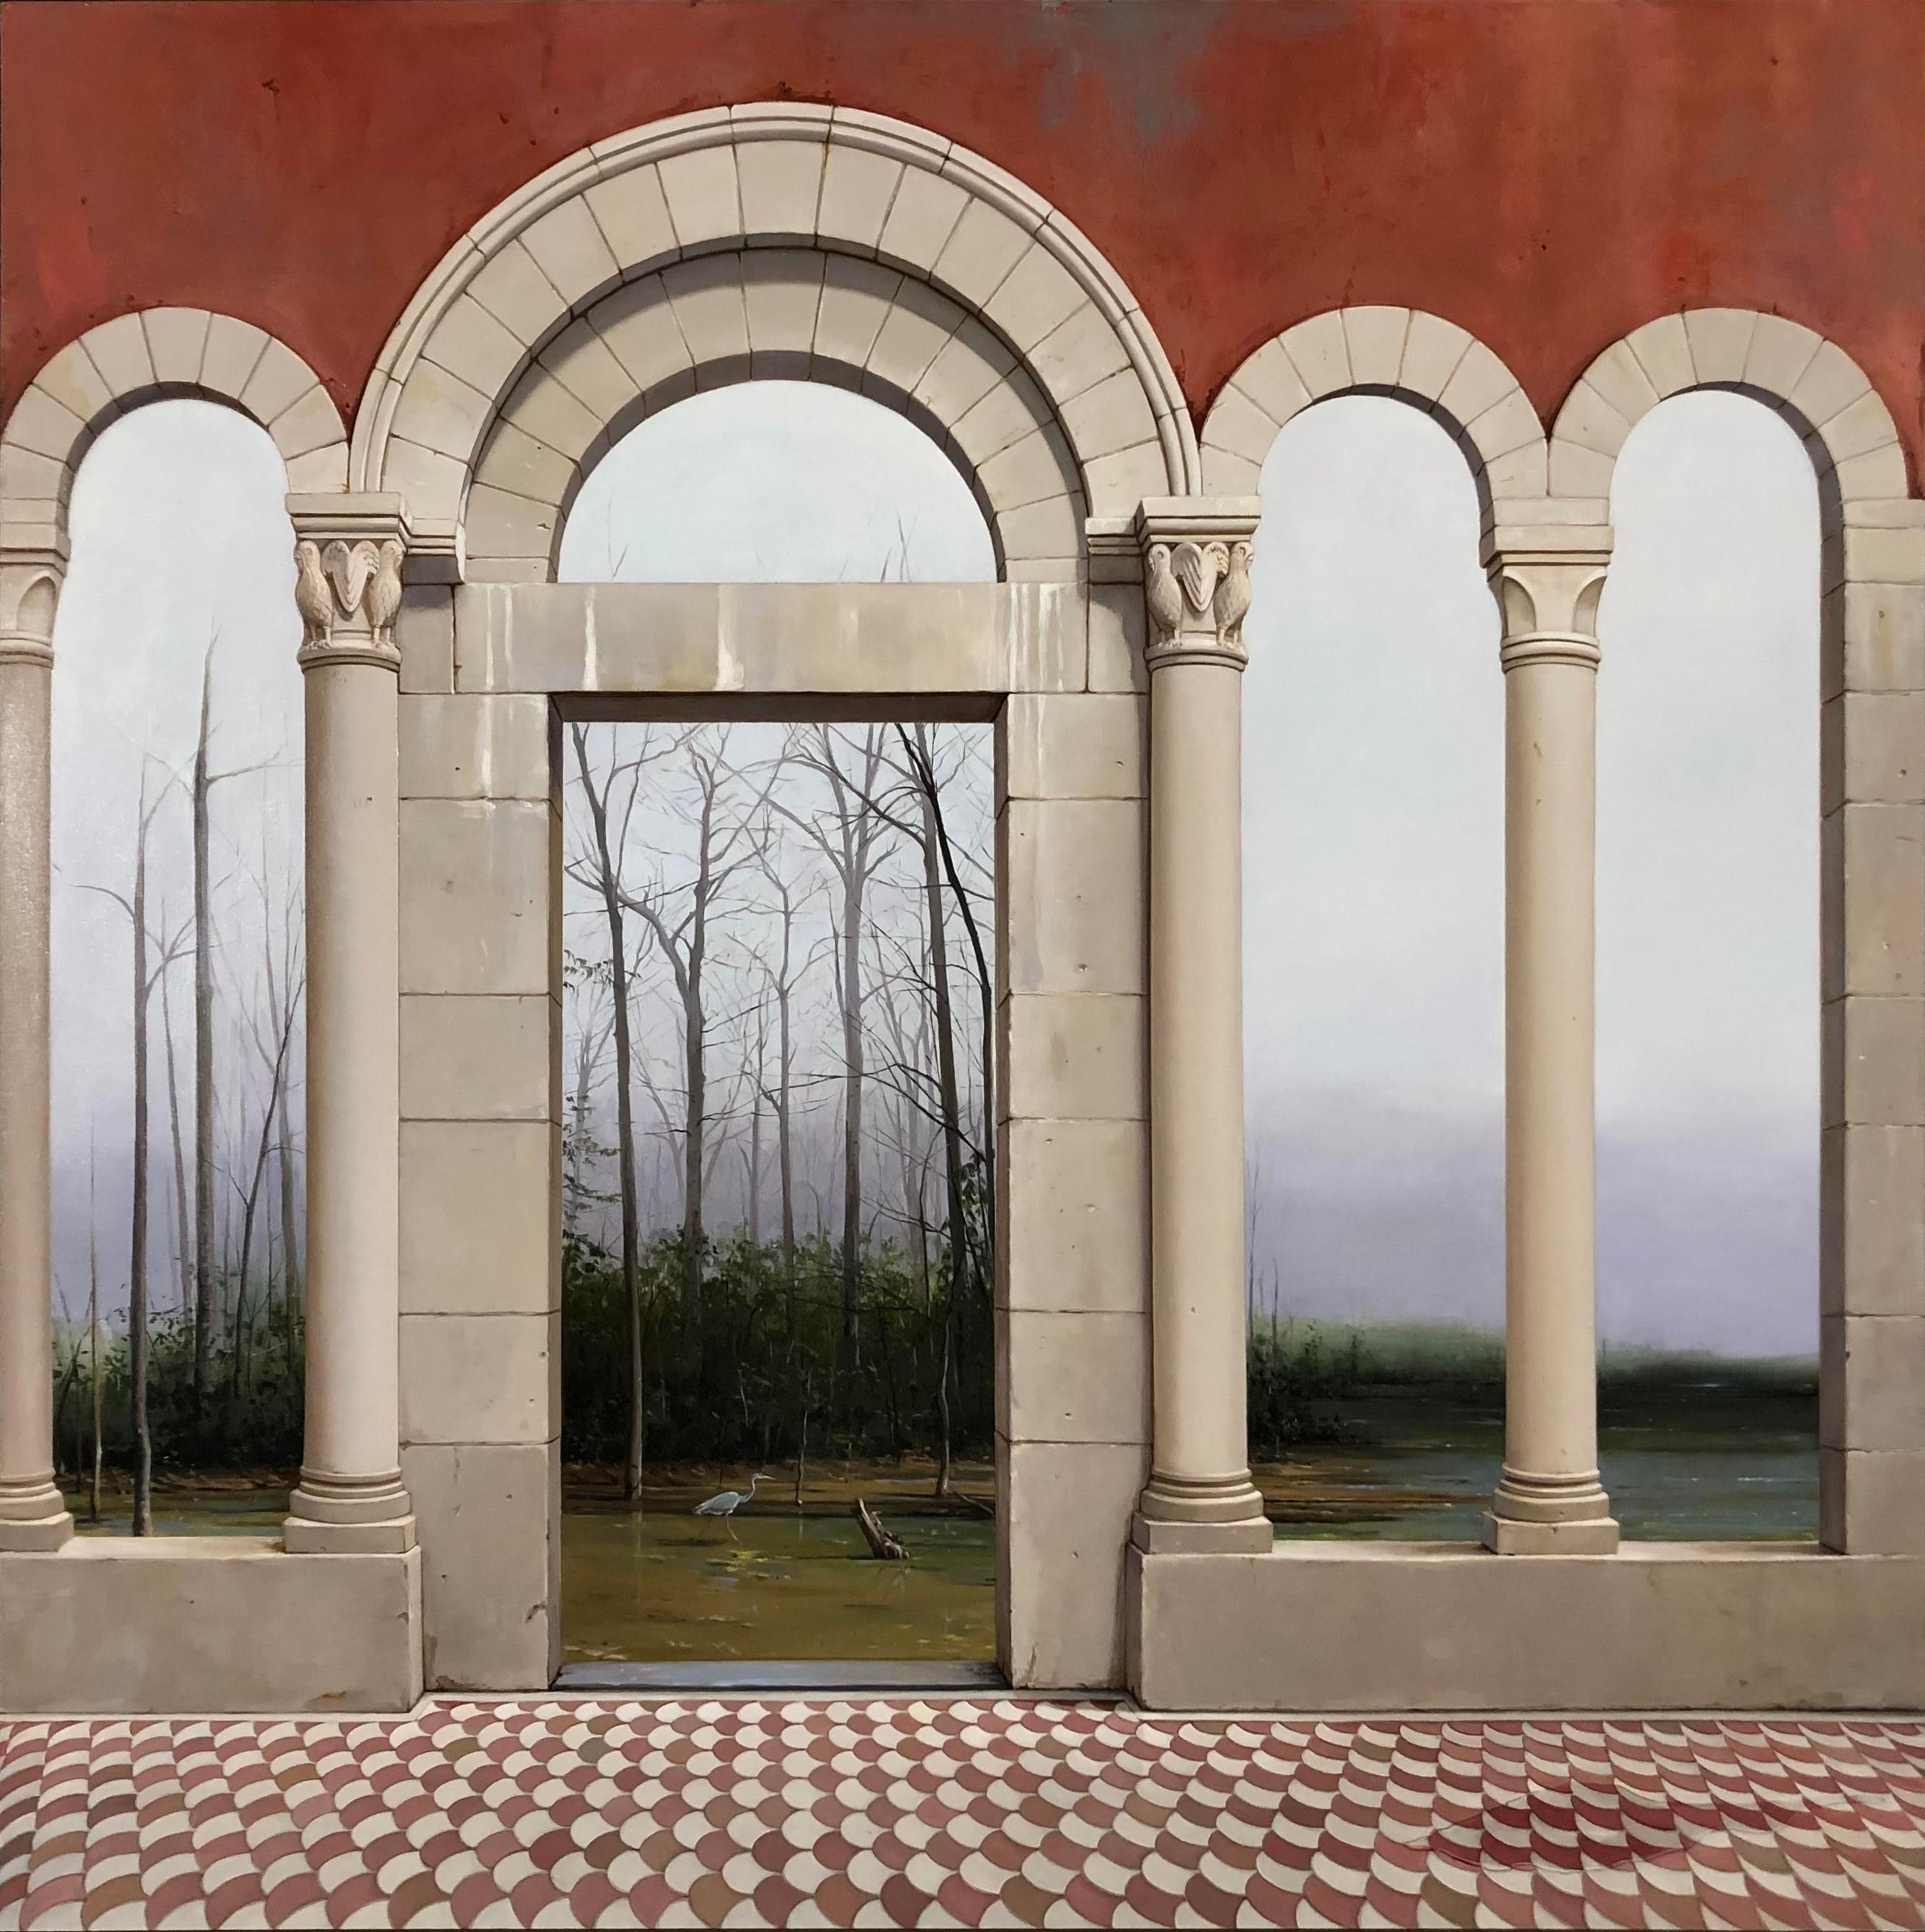 Carol Pylant Landscape Painting - La Scomparsa - Ancient Architectural Arched Doorways Leading to Lush Landscape